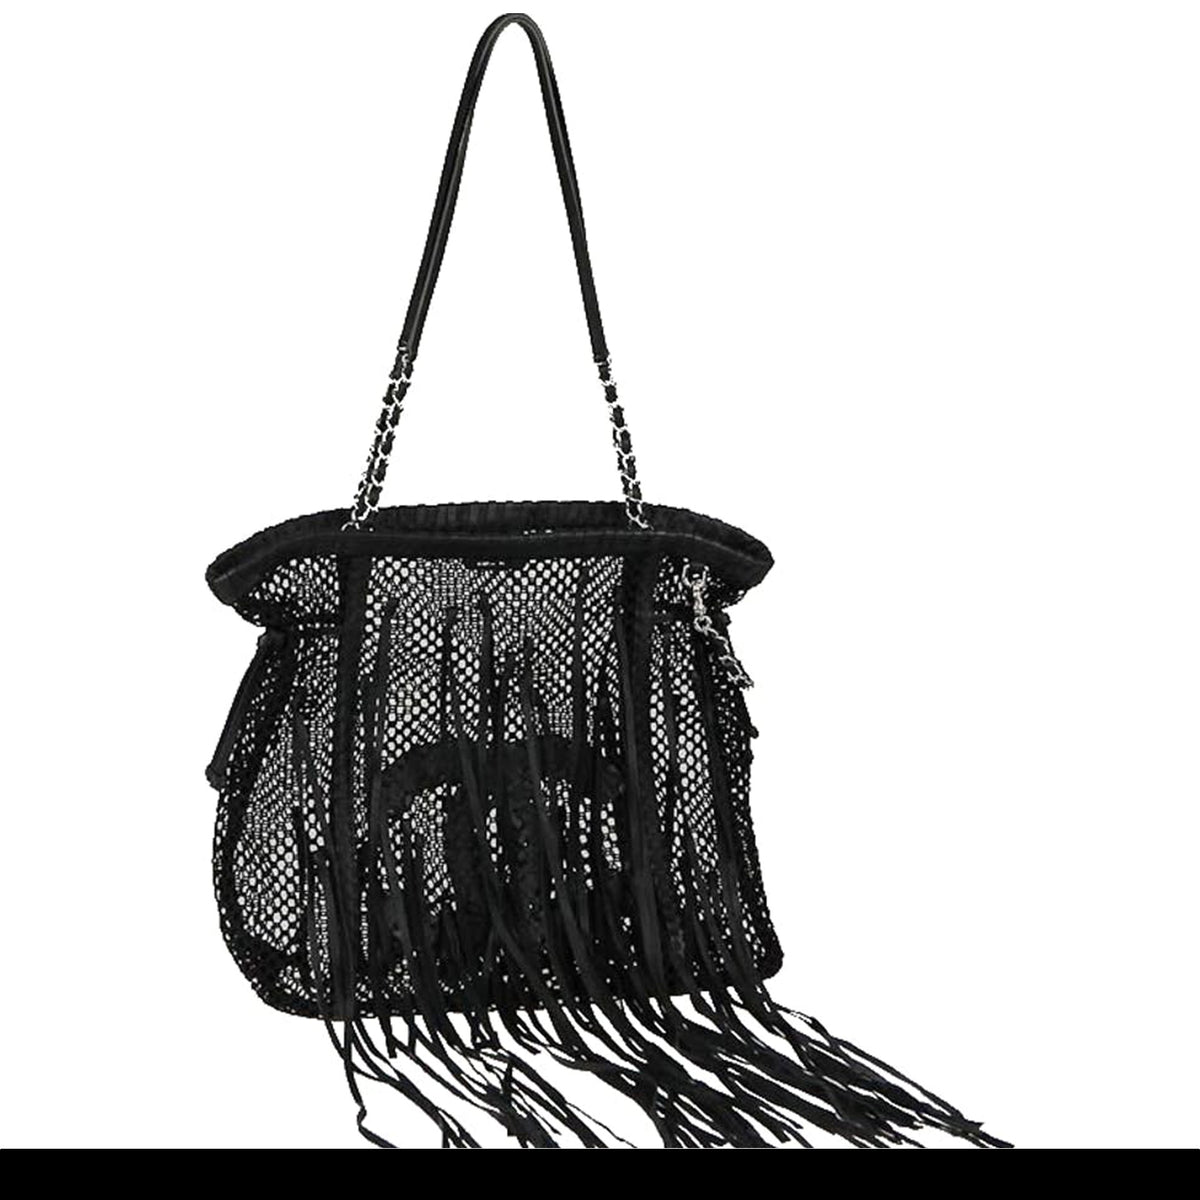 Chanel Crochet Fringe Tote - Neutrals Totes, Handbags - CHA89313